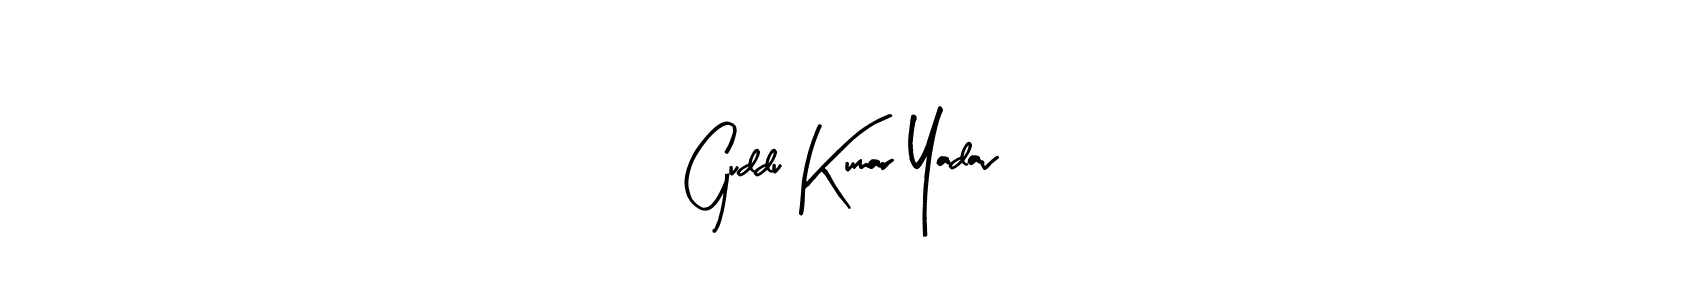 Make a beautiful signature design for name Guddu Kumar Yadav. Use this online signature maker to create a handwritten signature for free. Guddu Kumar Yadav signature style 8 images and pictures png